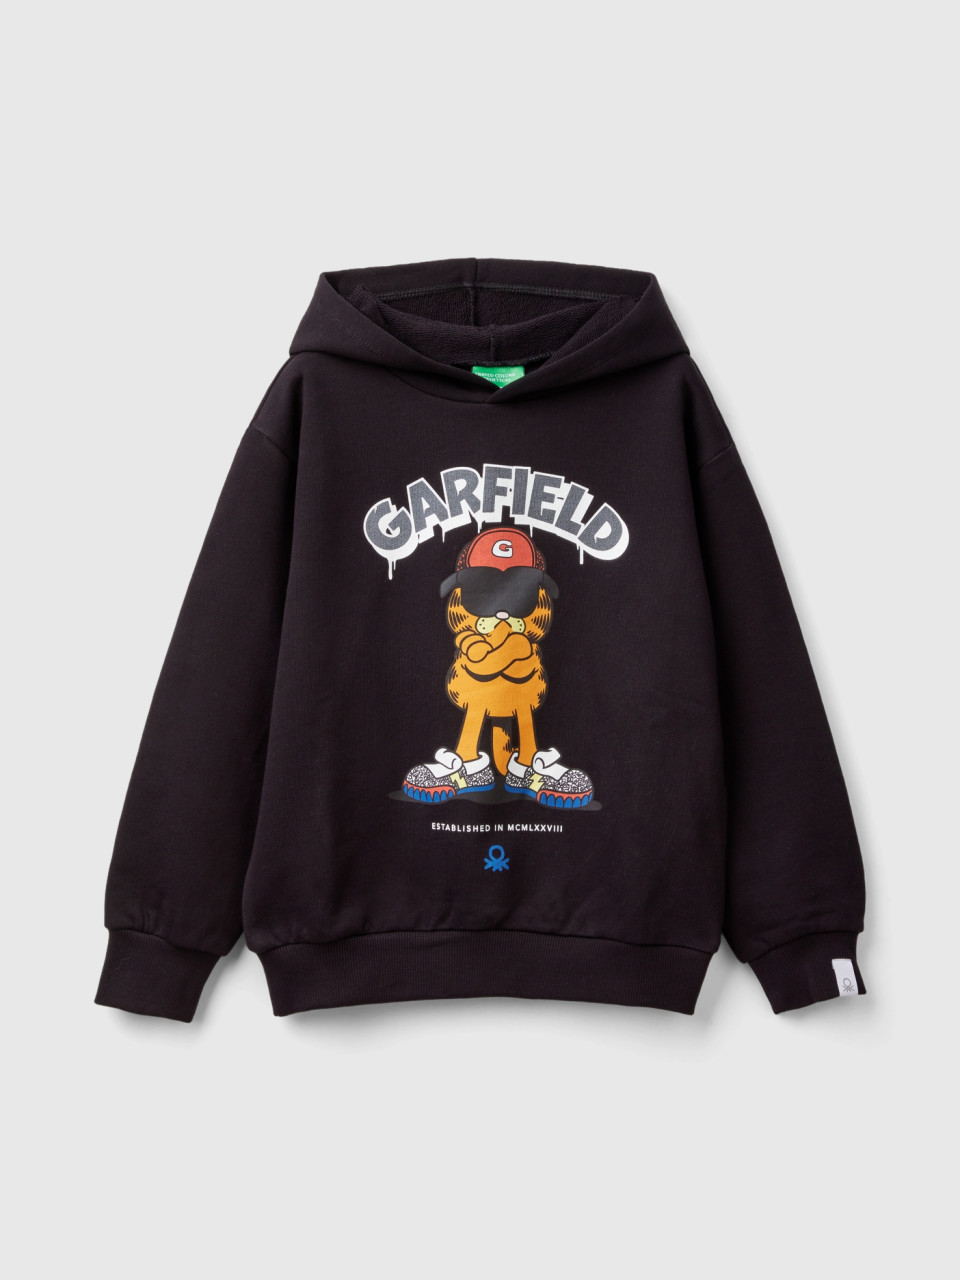 Benetton, Garfield Sweatshirt ©2024 By Paws, size S, Black